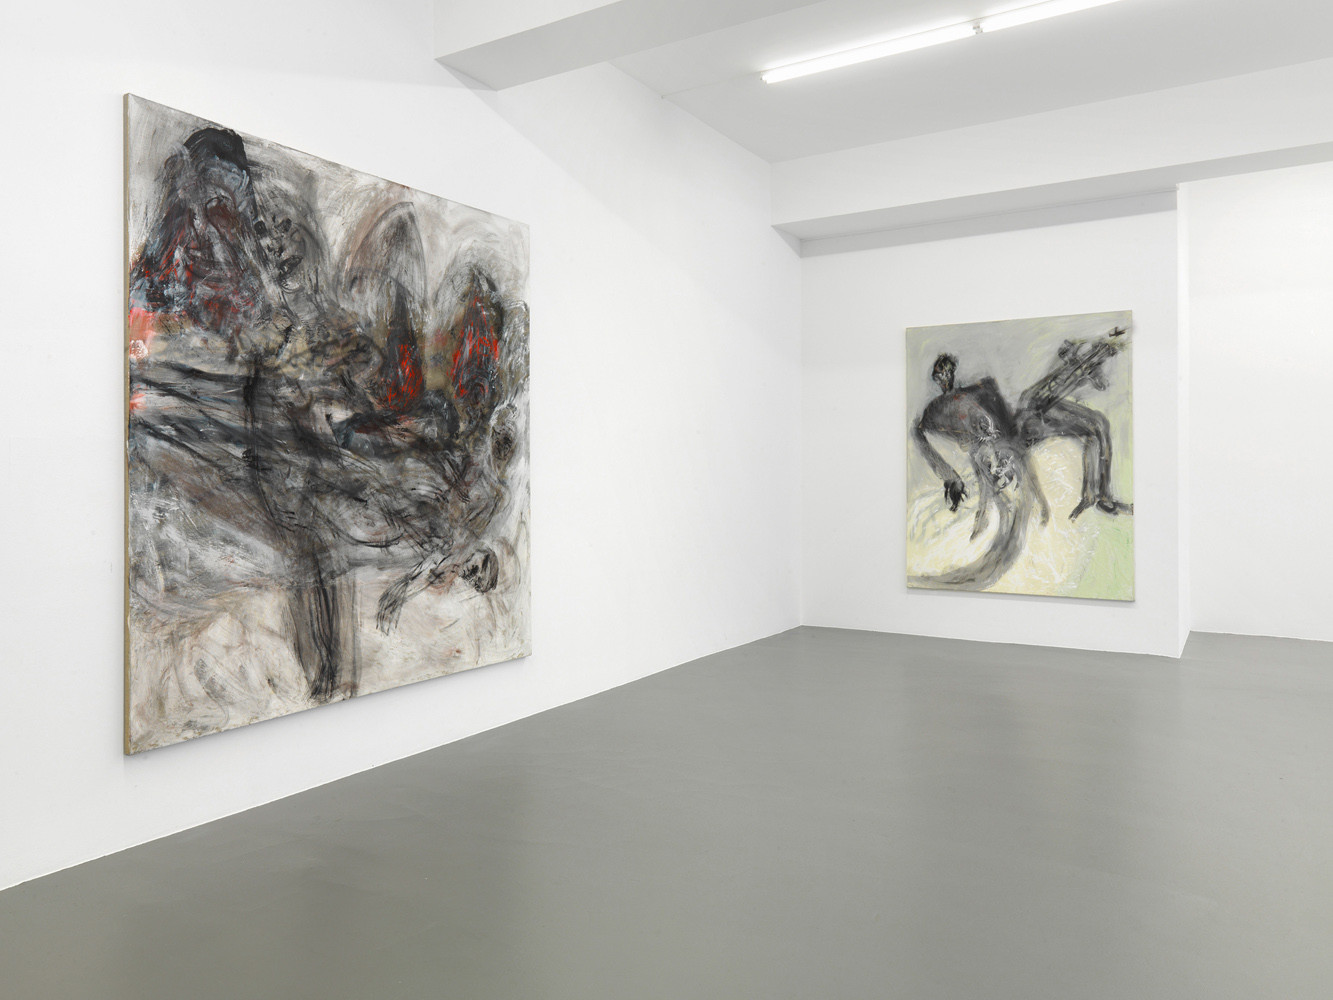 Martin Disler, ‘Malerei’, Installationsansicht, 2014